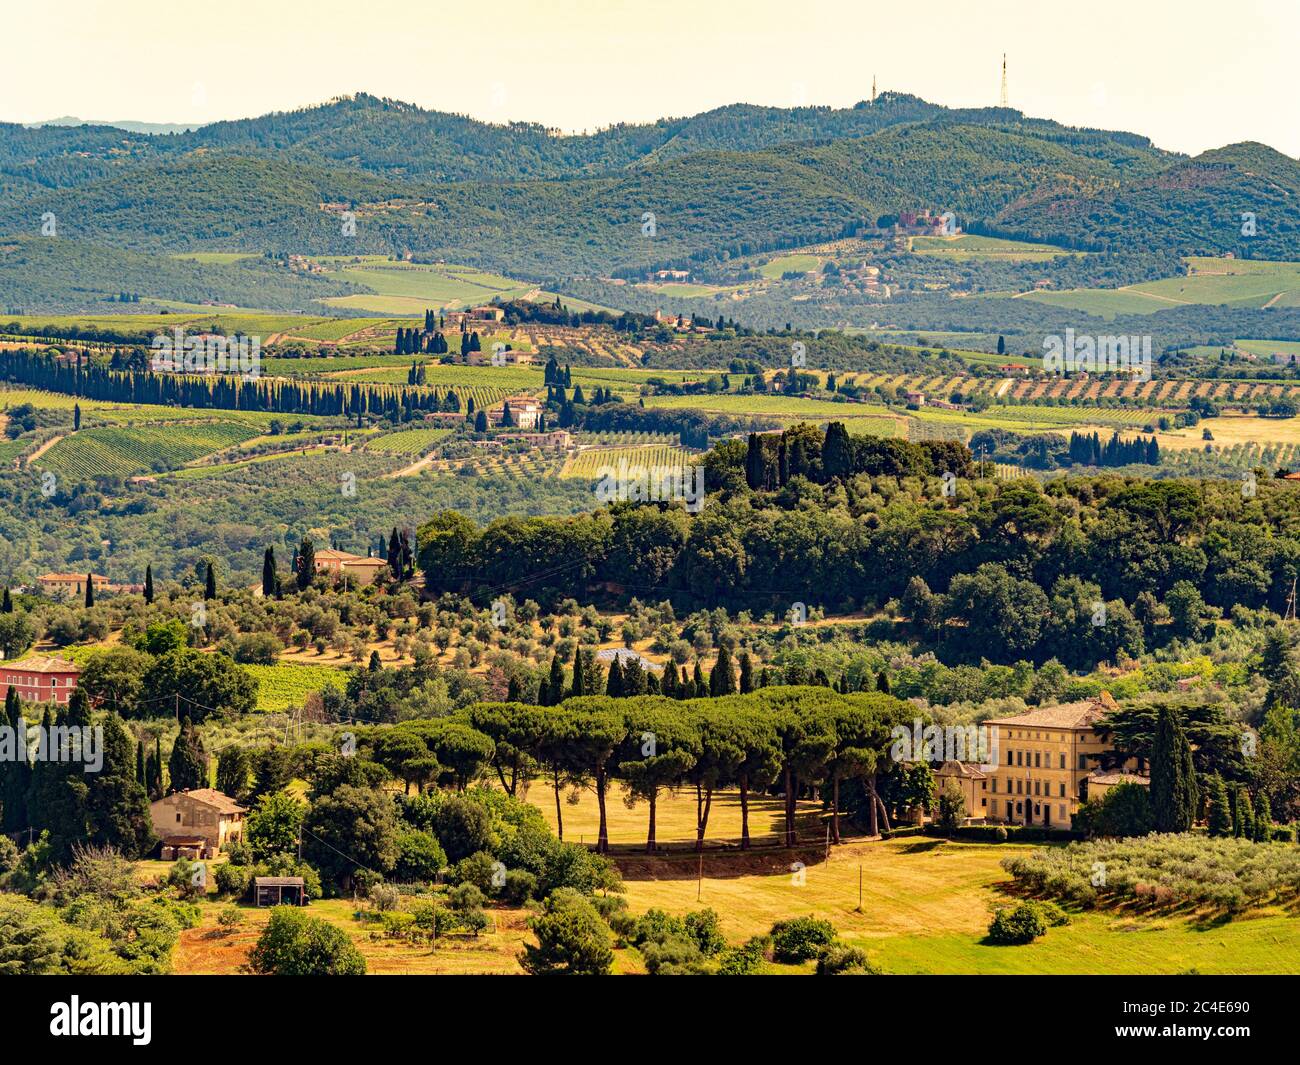 Tuscany landscape with villas, Umbrella pine and Cypress trees. Siena, Italy. Stock Photo